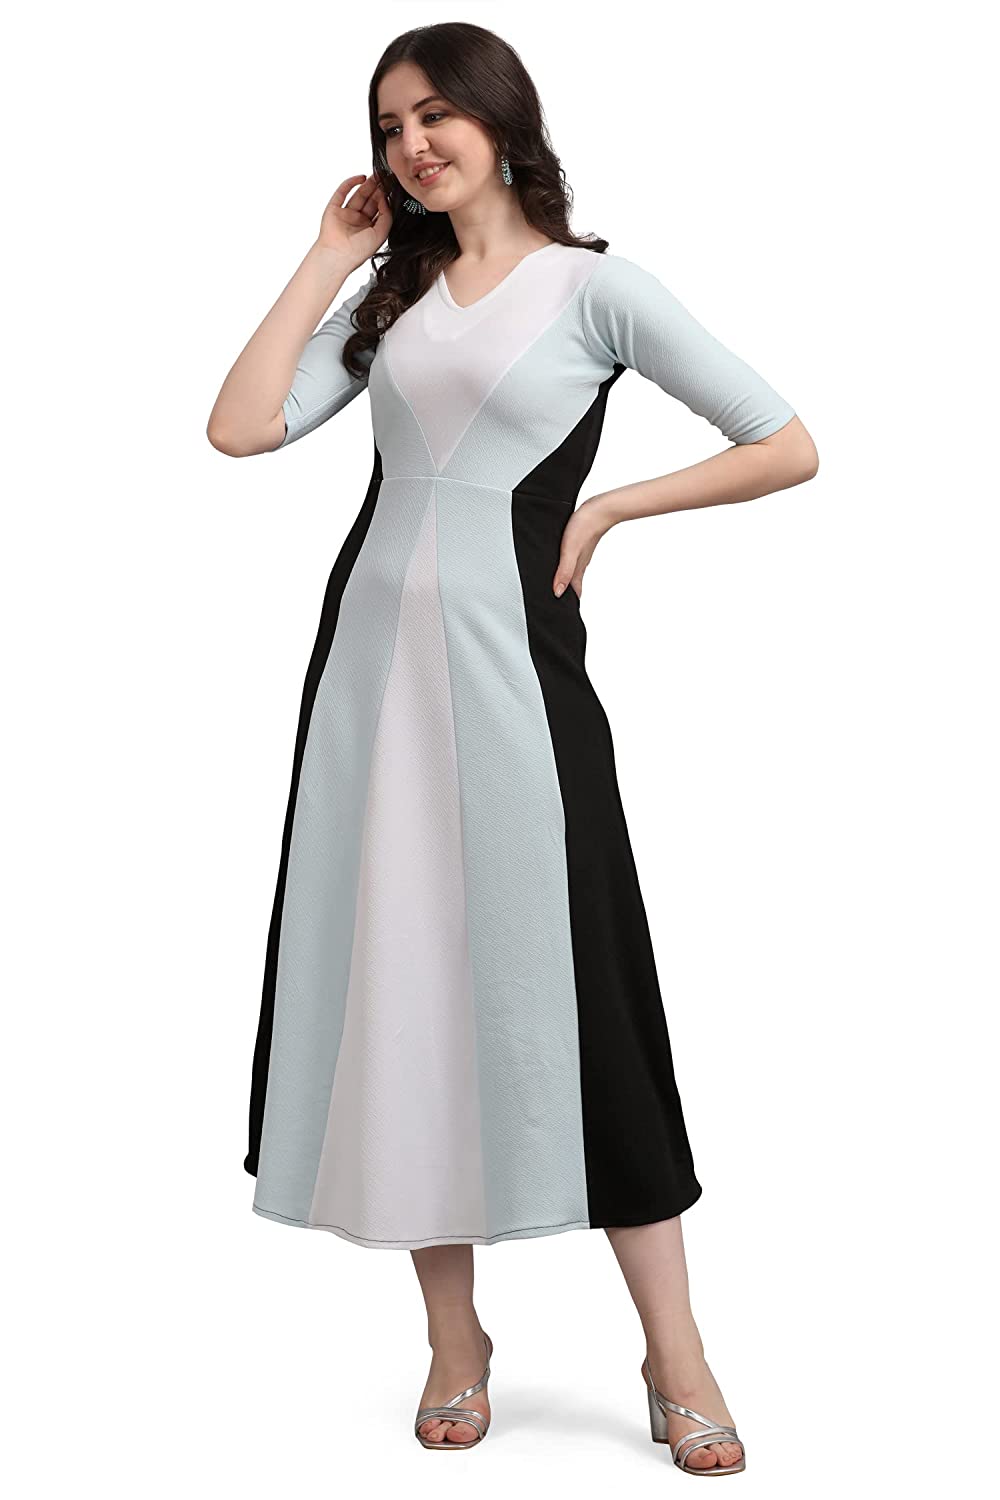 PURVAJA Women's Maxi Dress -  DRESSES in Sri Lanka from Arcade Online Shopping - Just Rs. 4699!